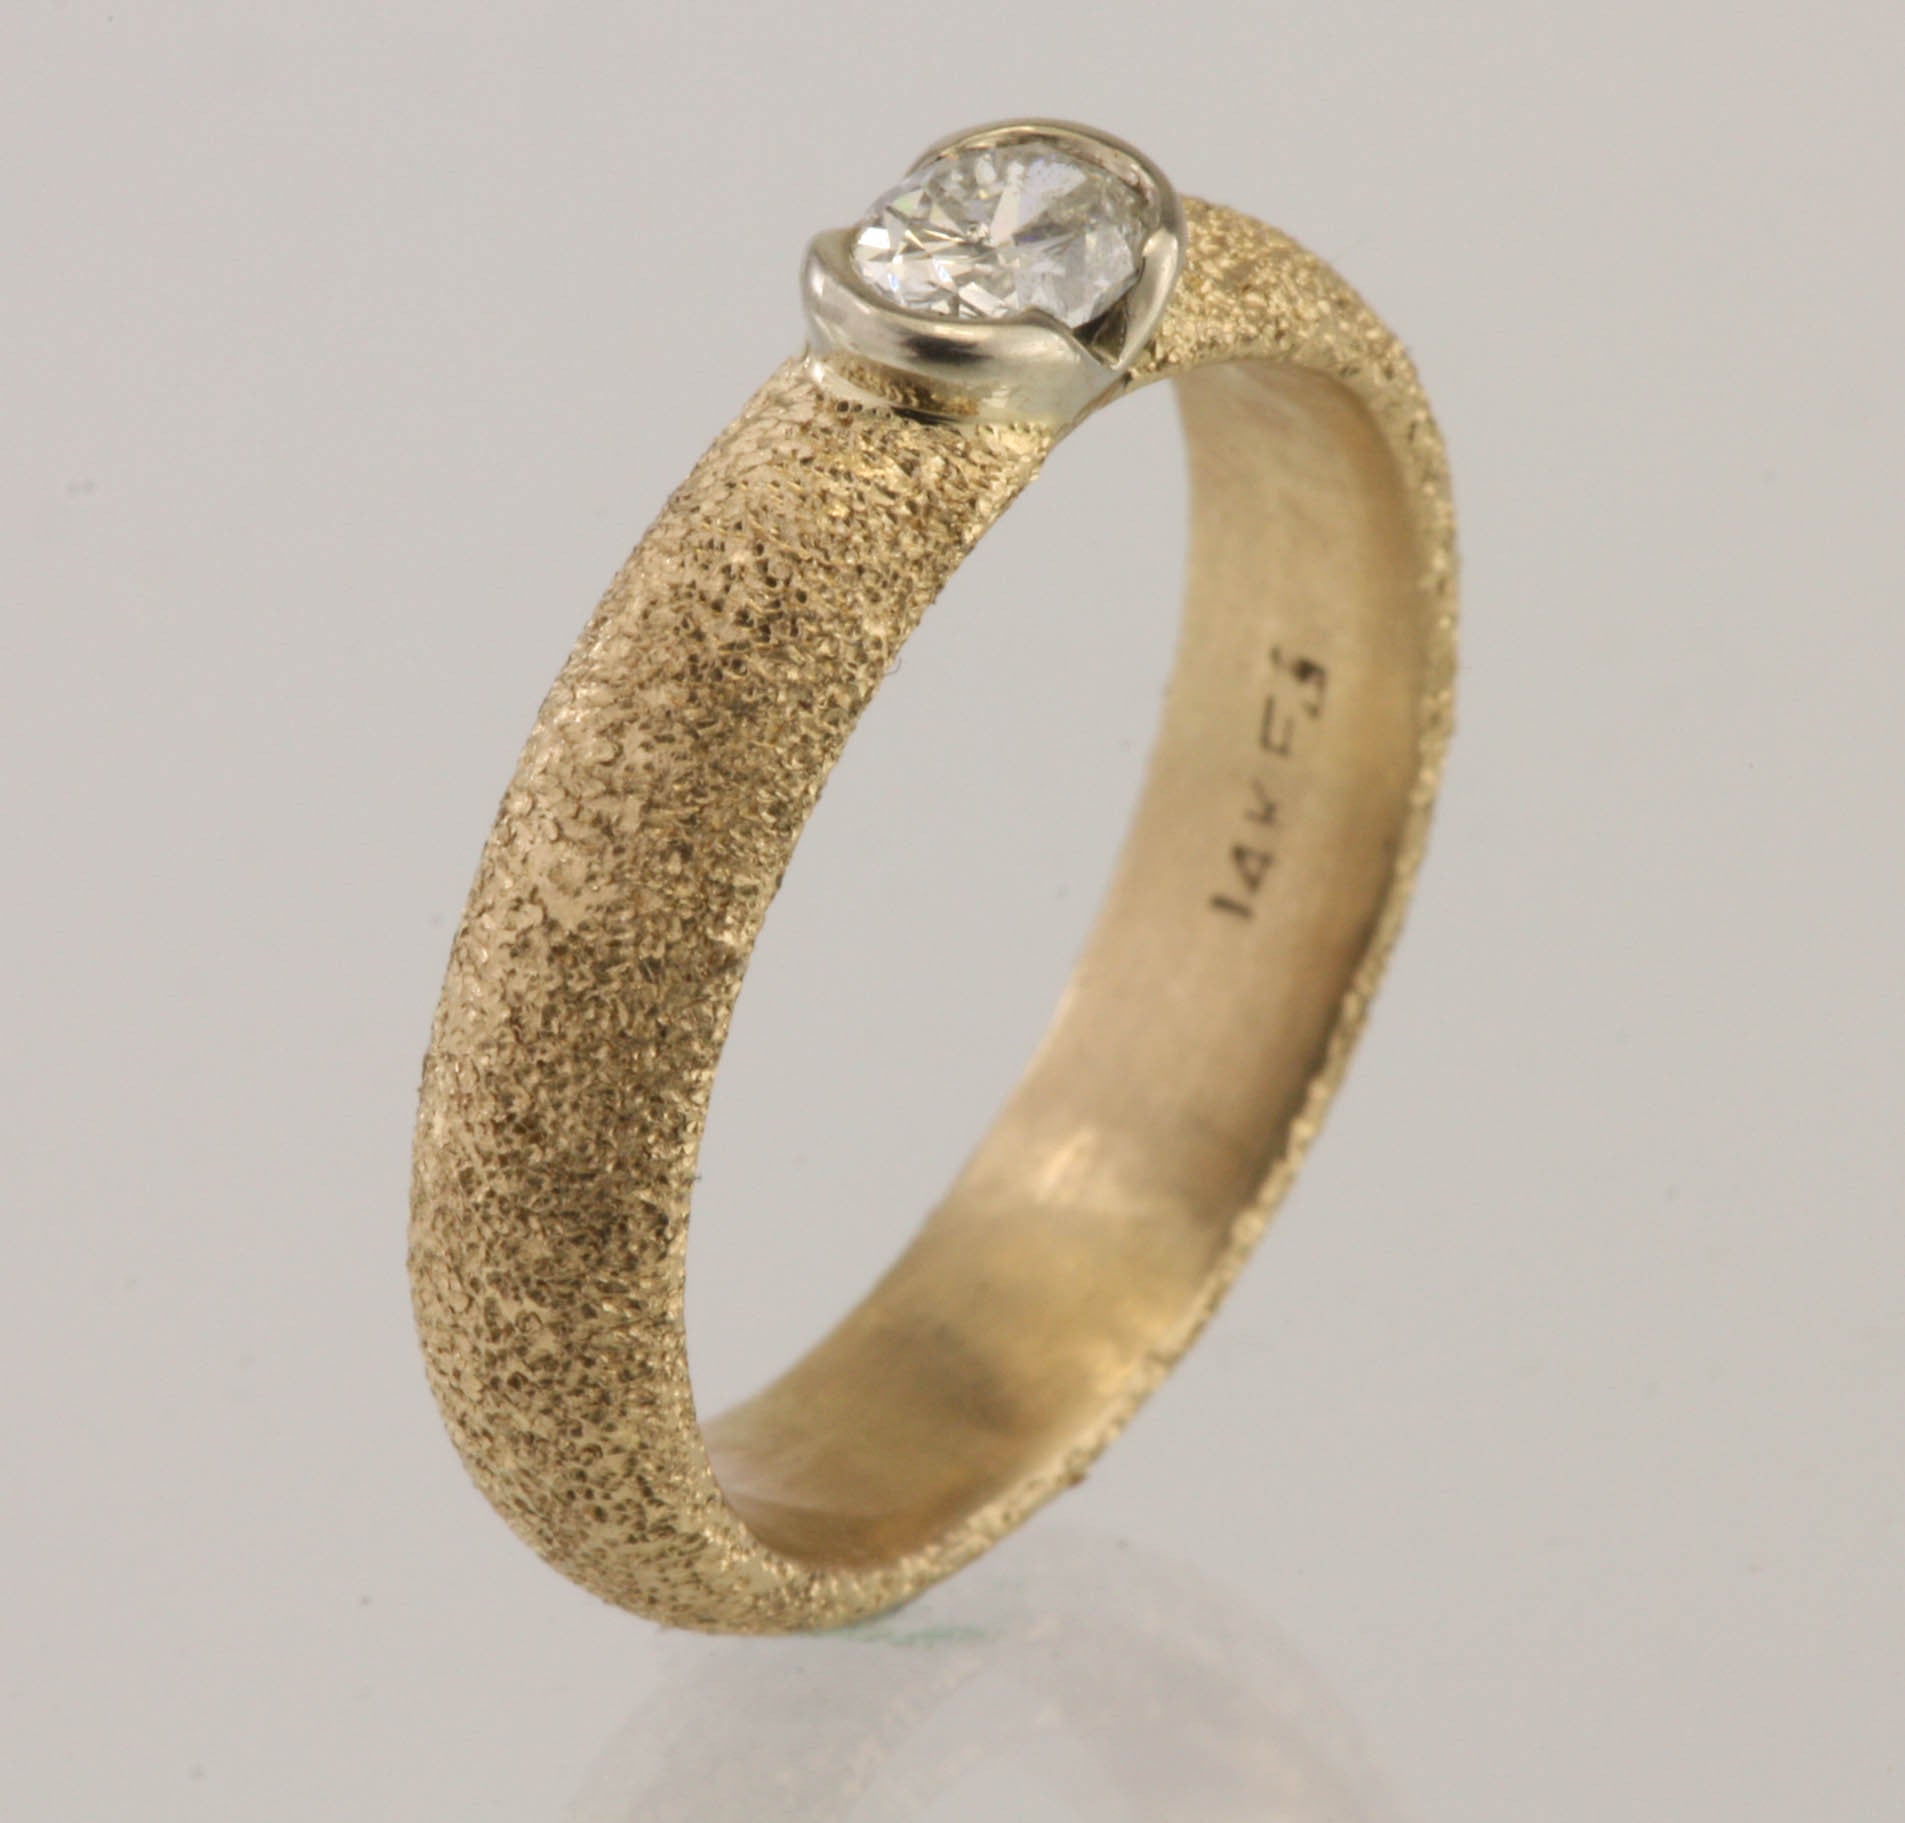 Oval Diamond In 14kt Partial Bezel Ring